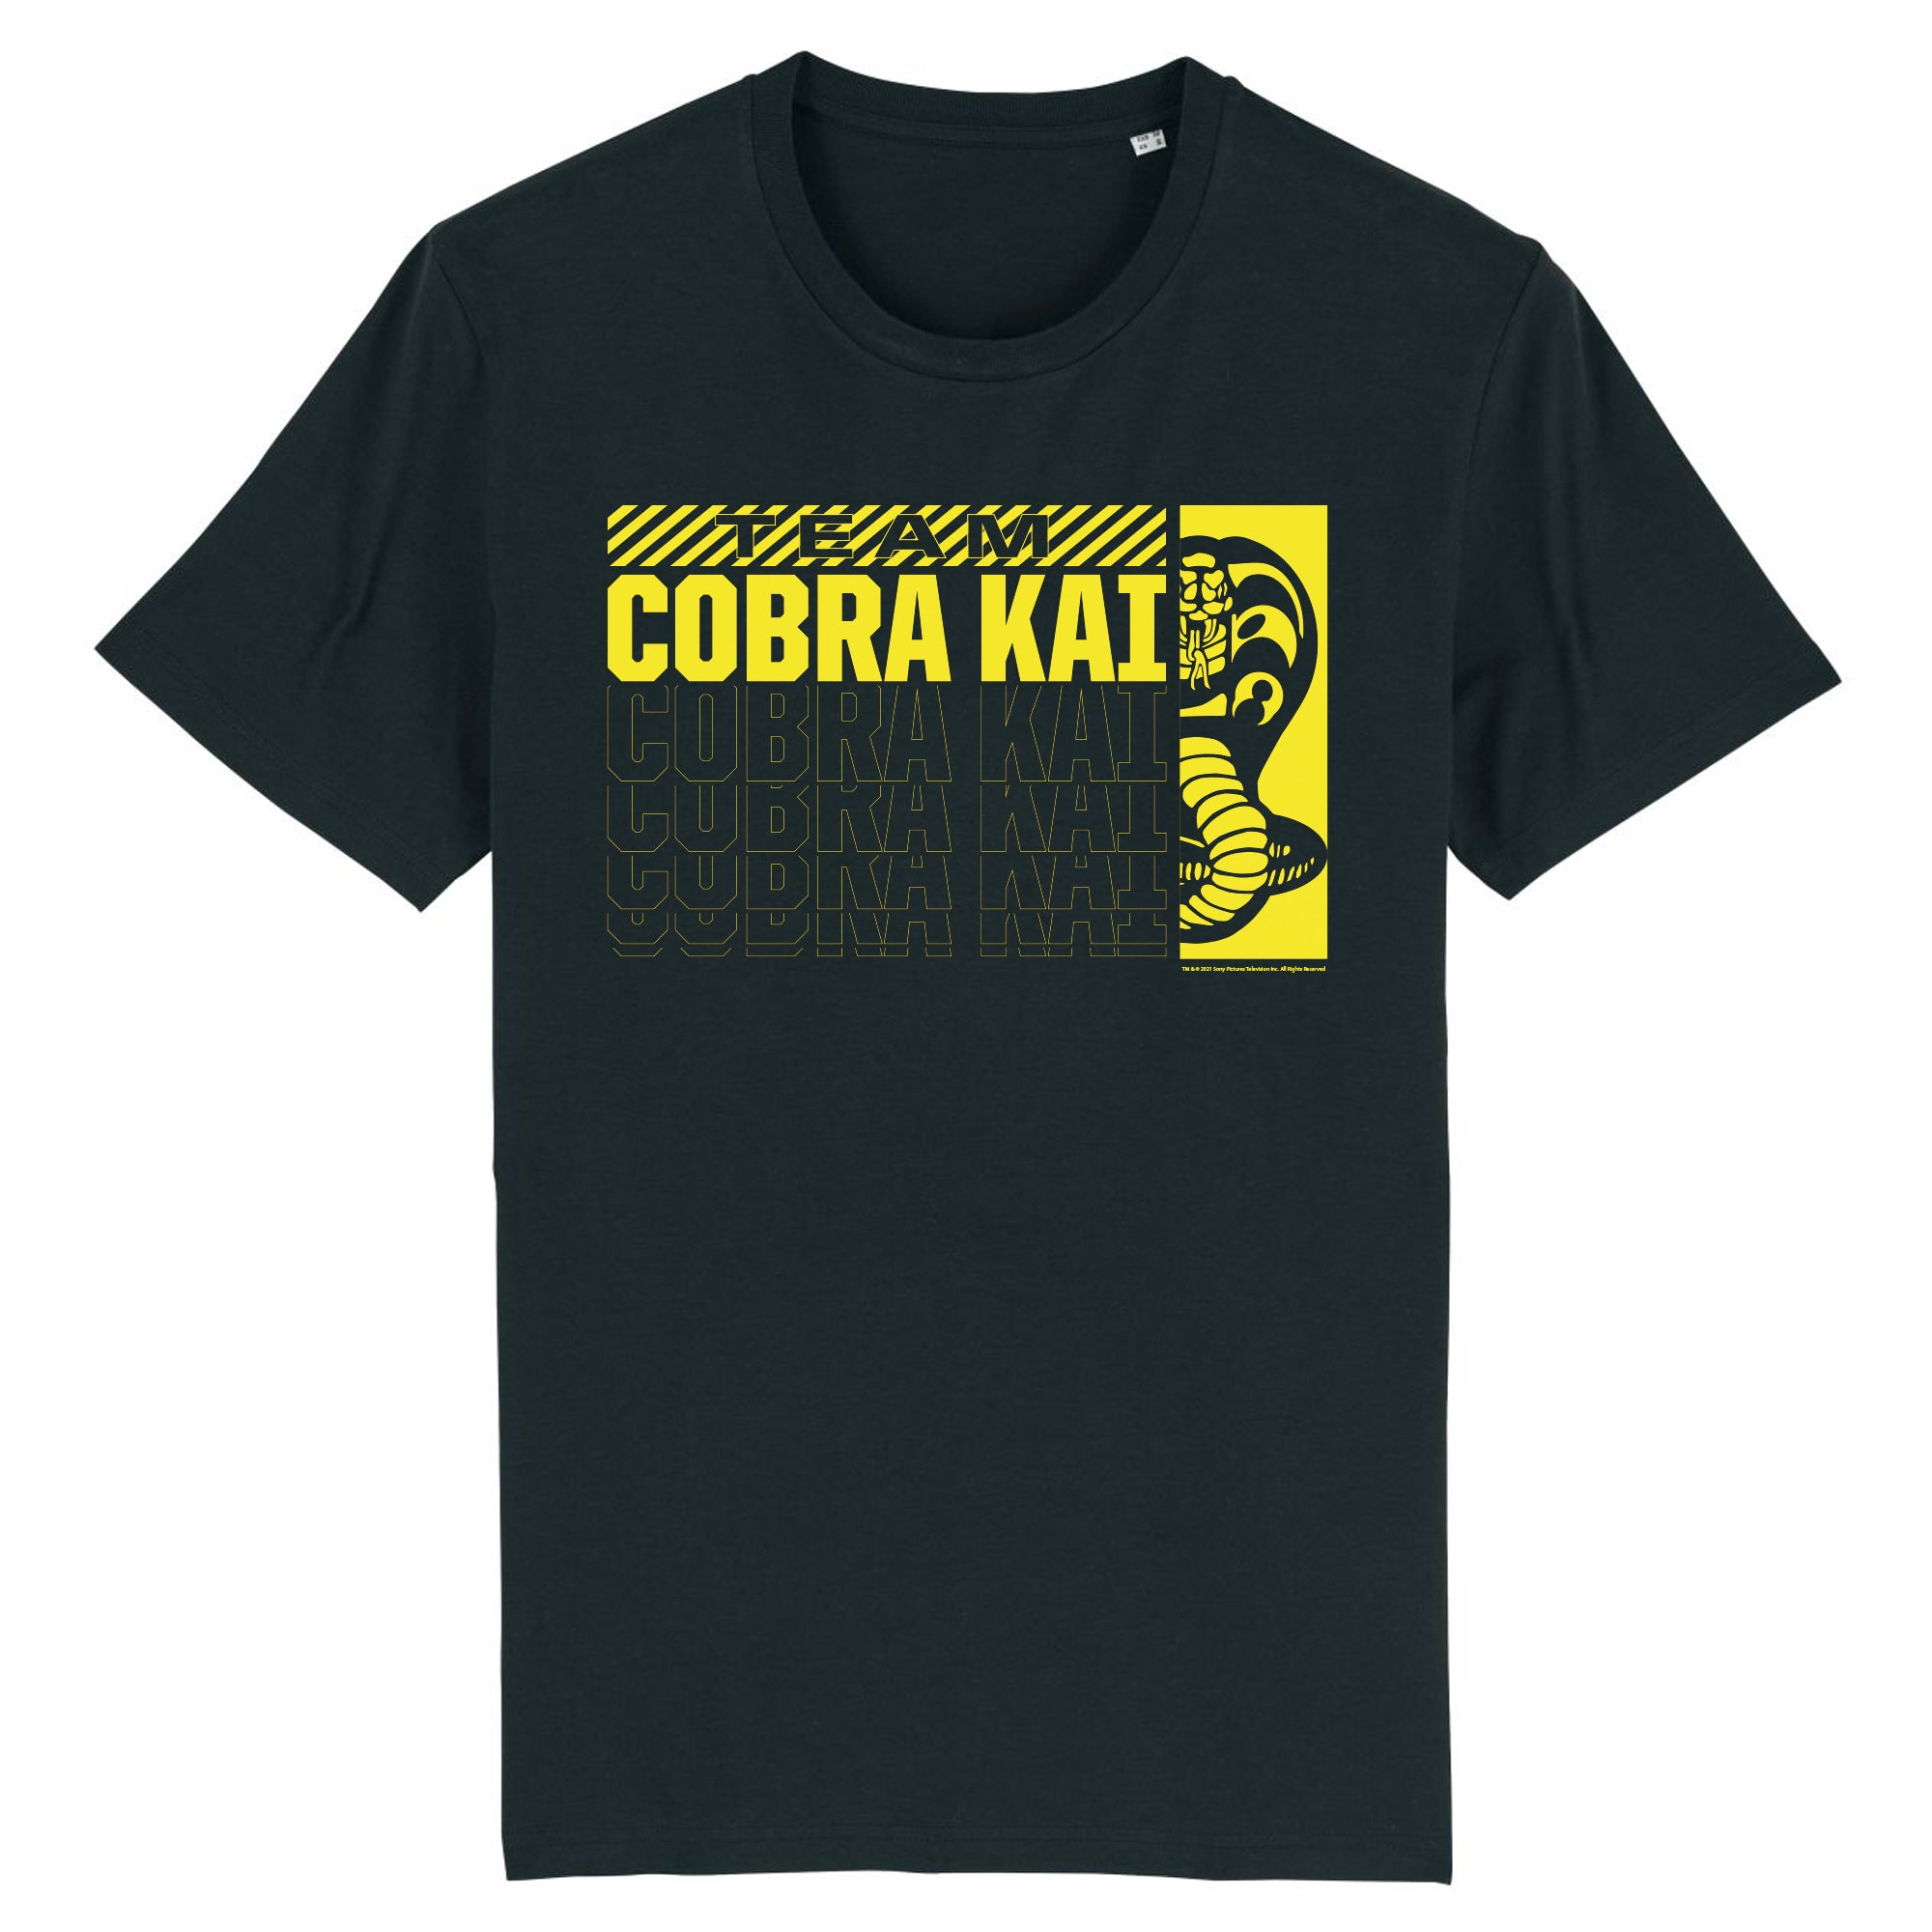 Cobra Kai Kicks Get Chicks Fleece Crew Sweatshirt Black MD